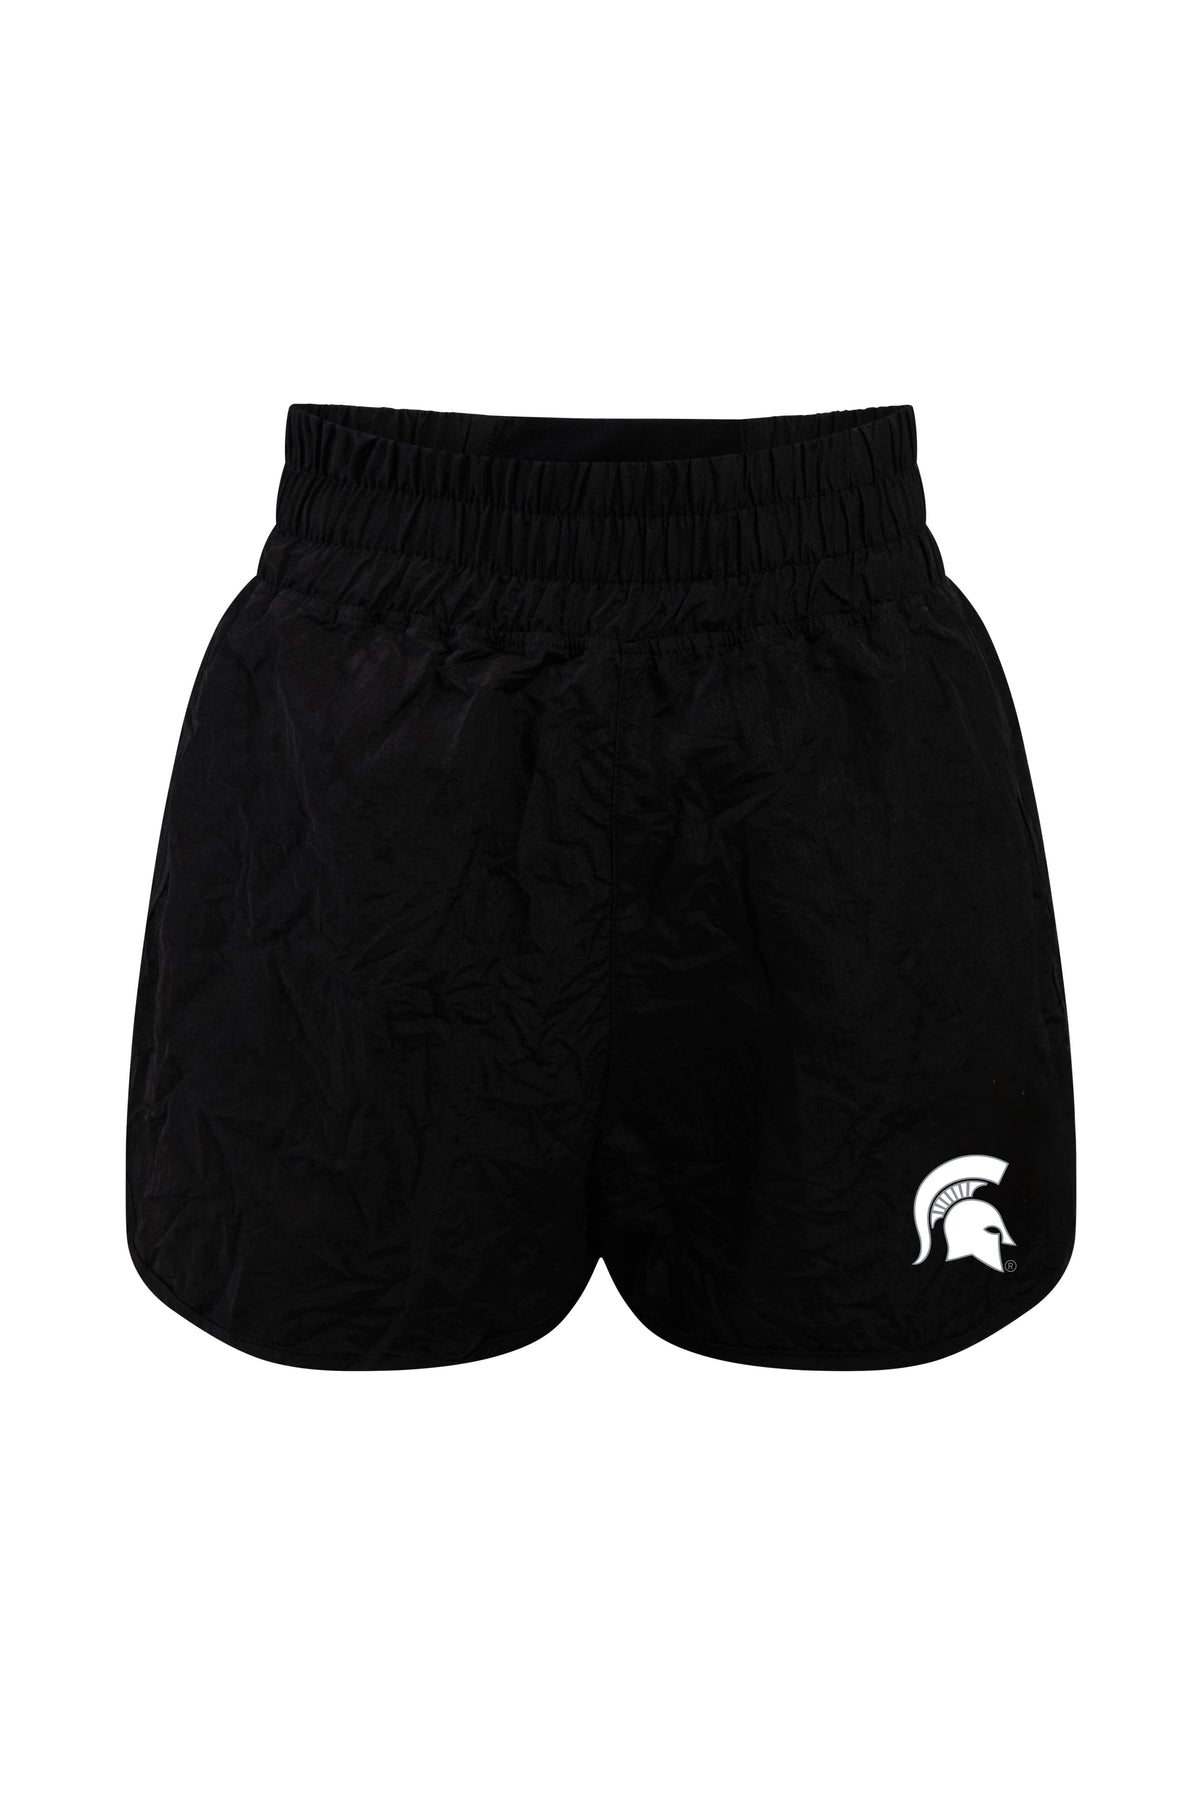 Michigan State University Boxer Short